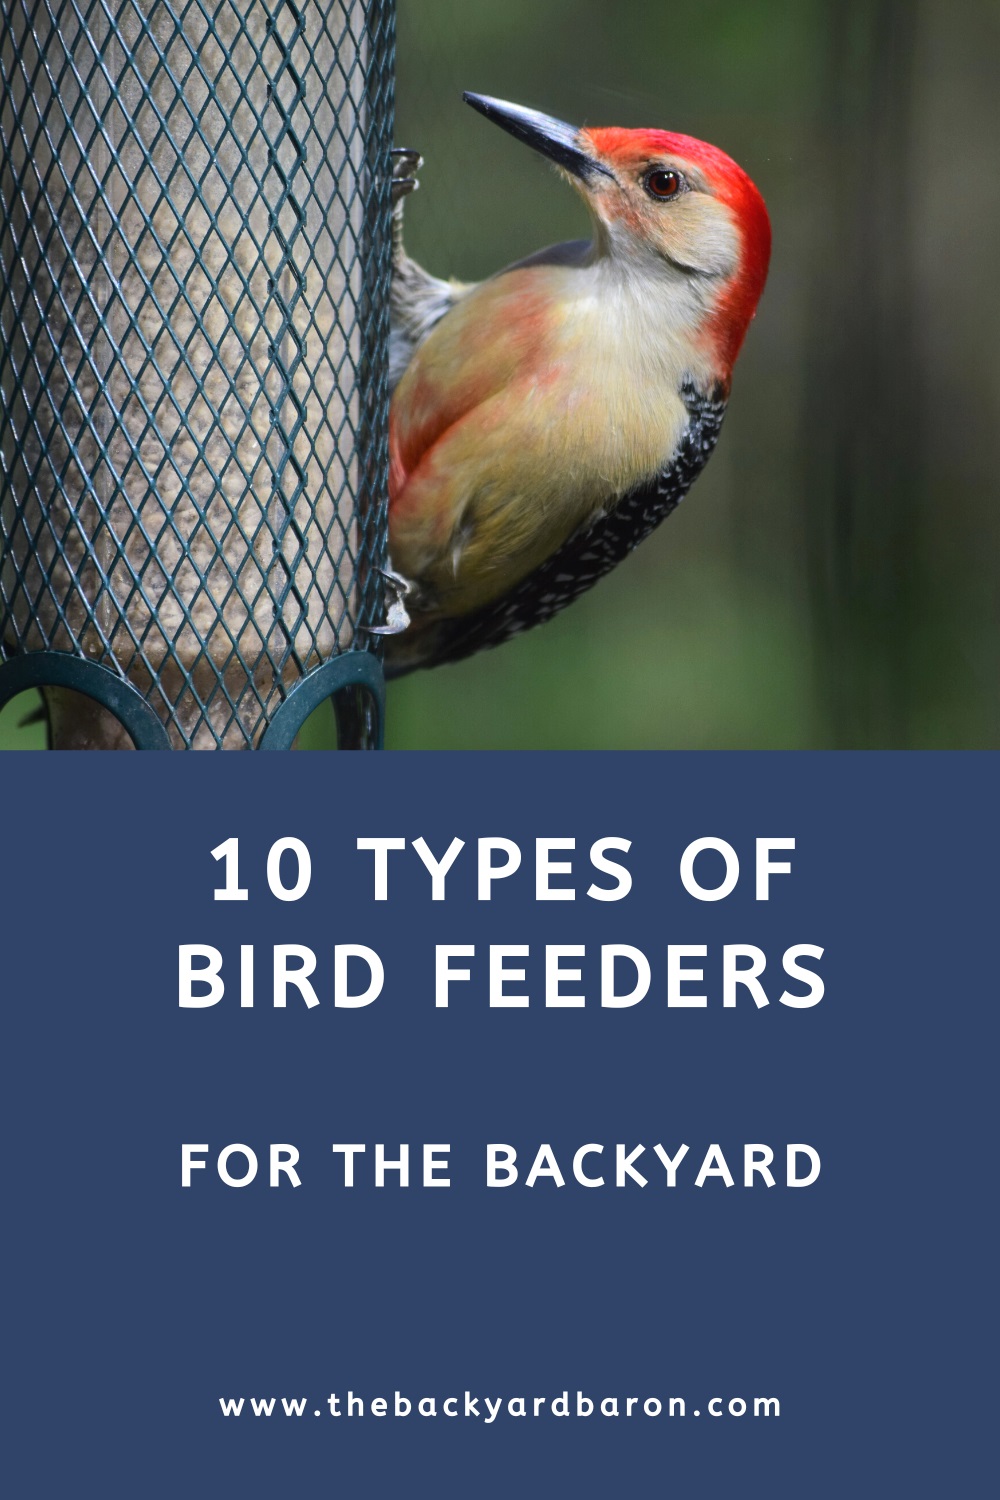 10 Bird feeder types for the backyard